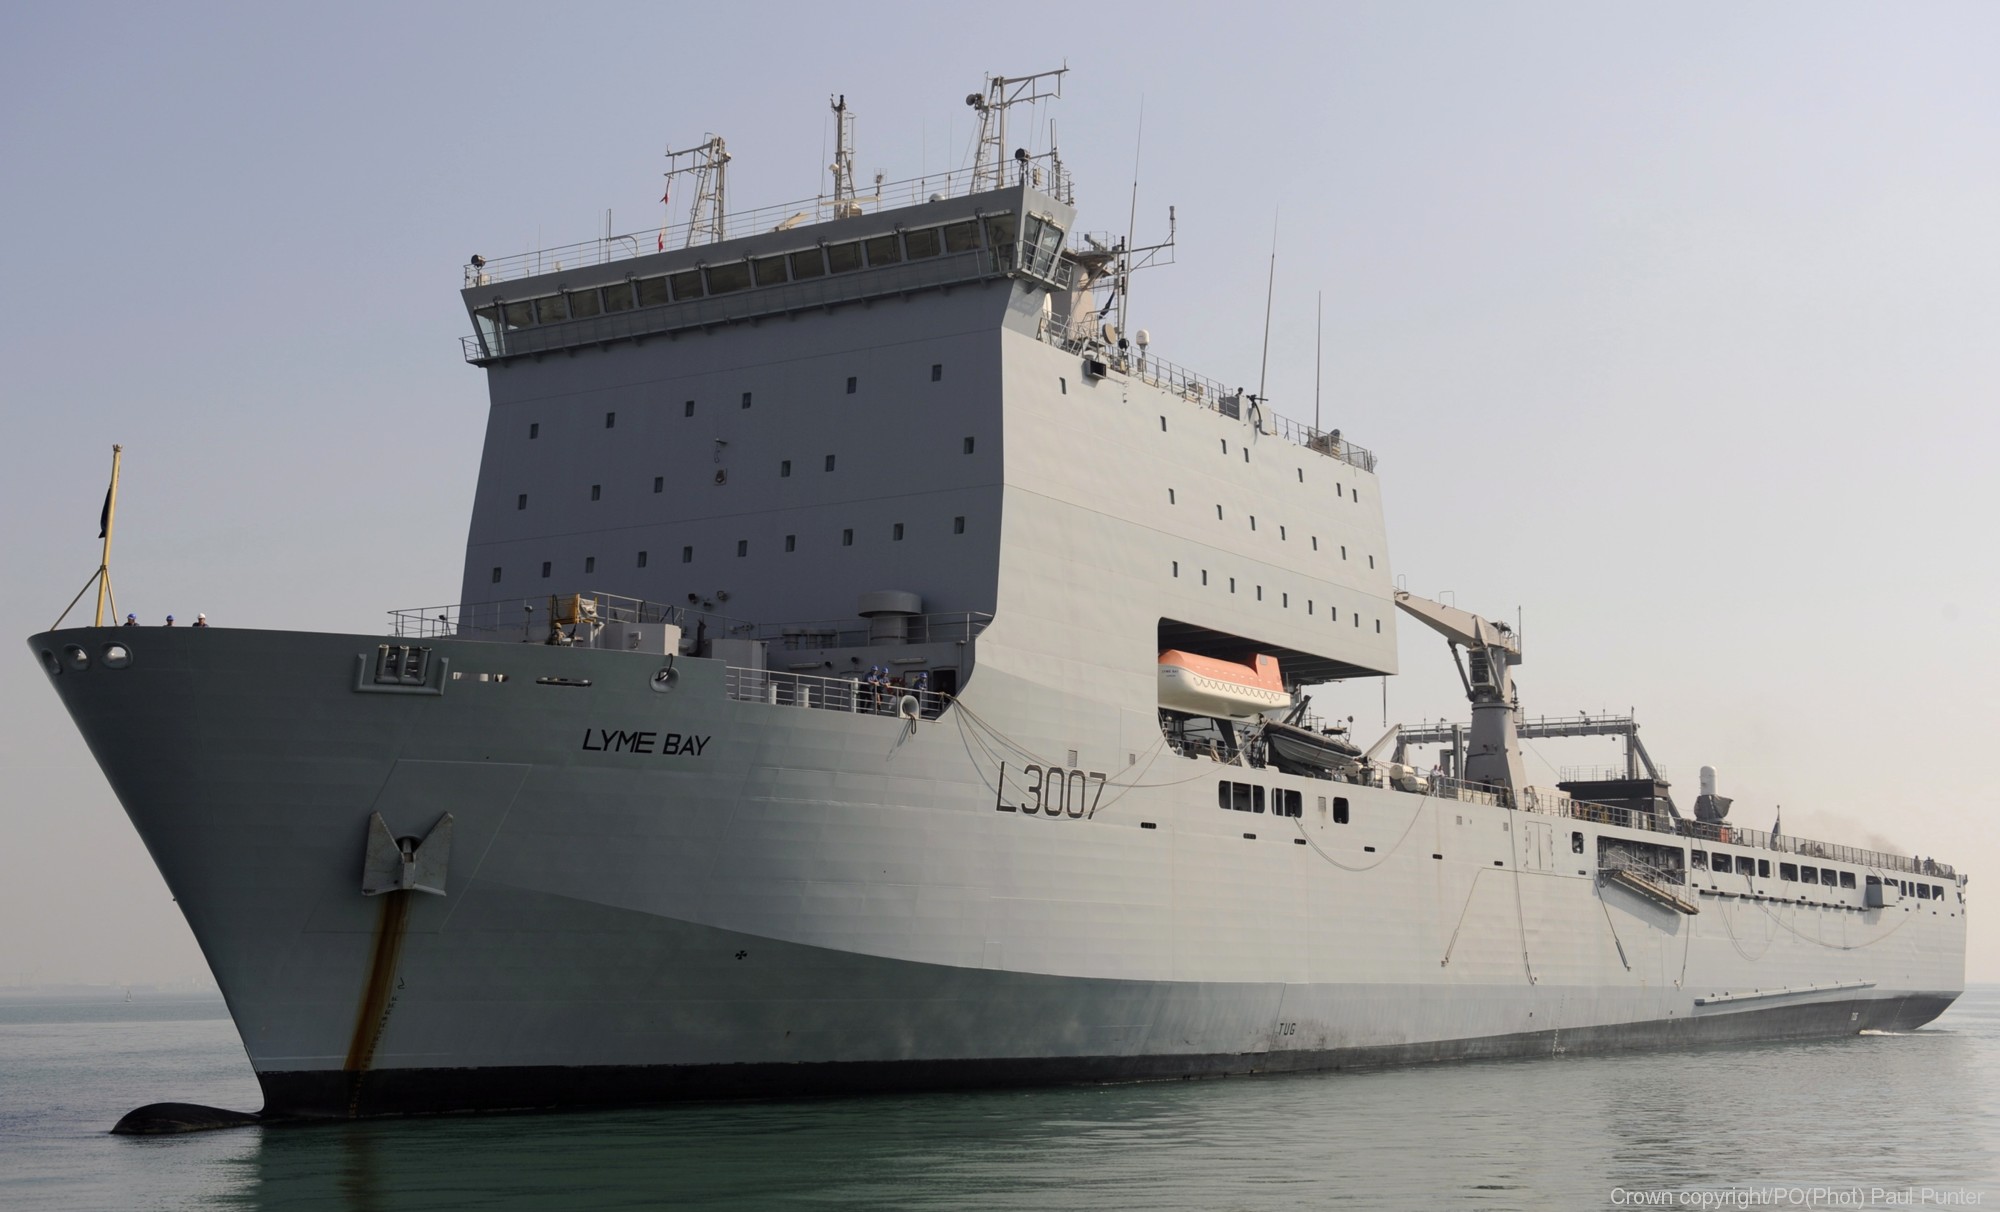 l-3007 rfa lyme bay dock landing ship royal fleet auxilary navy 04